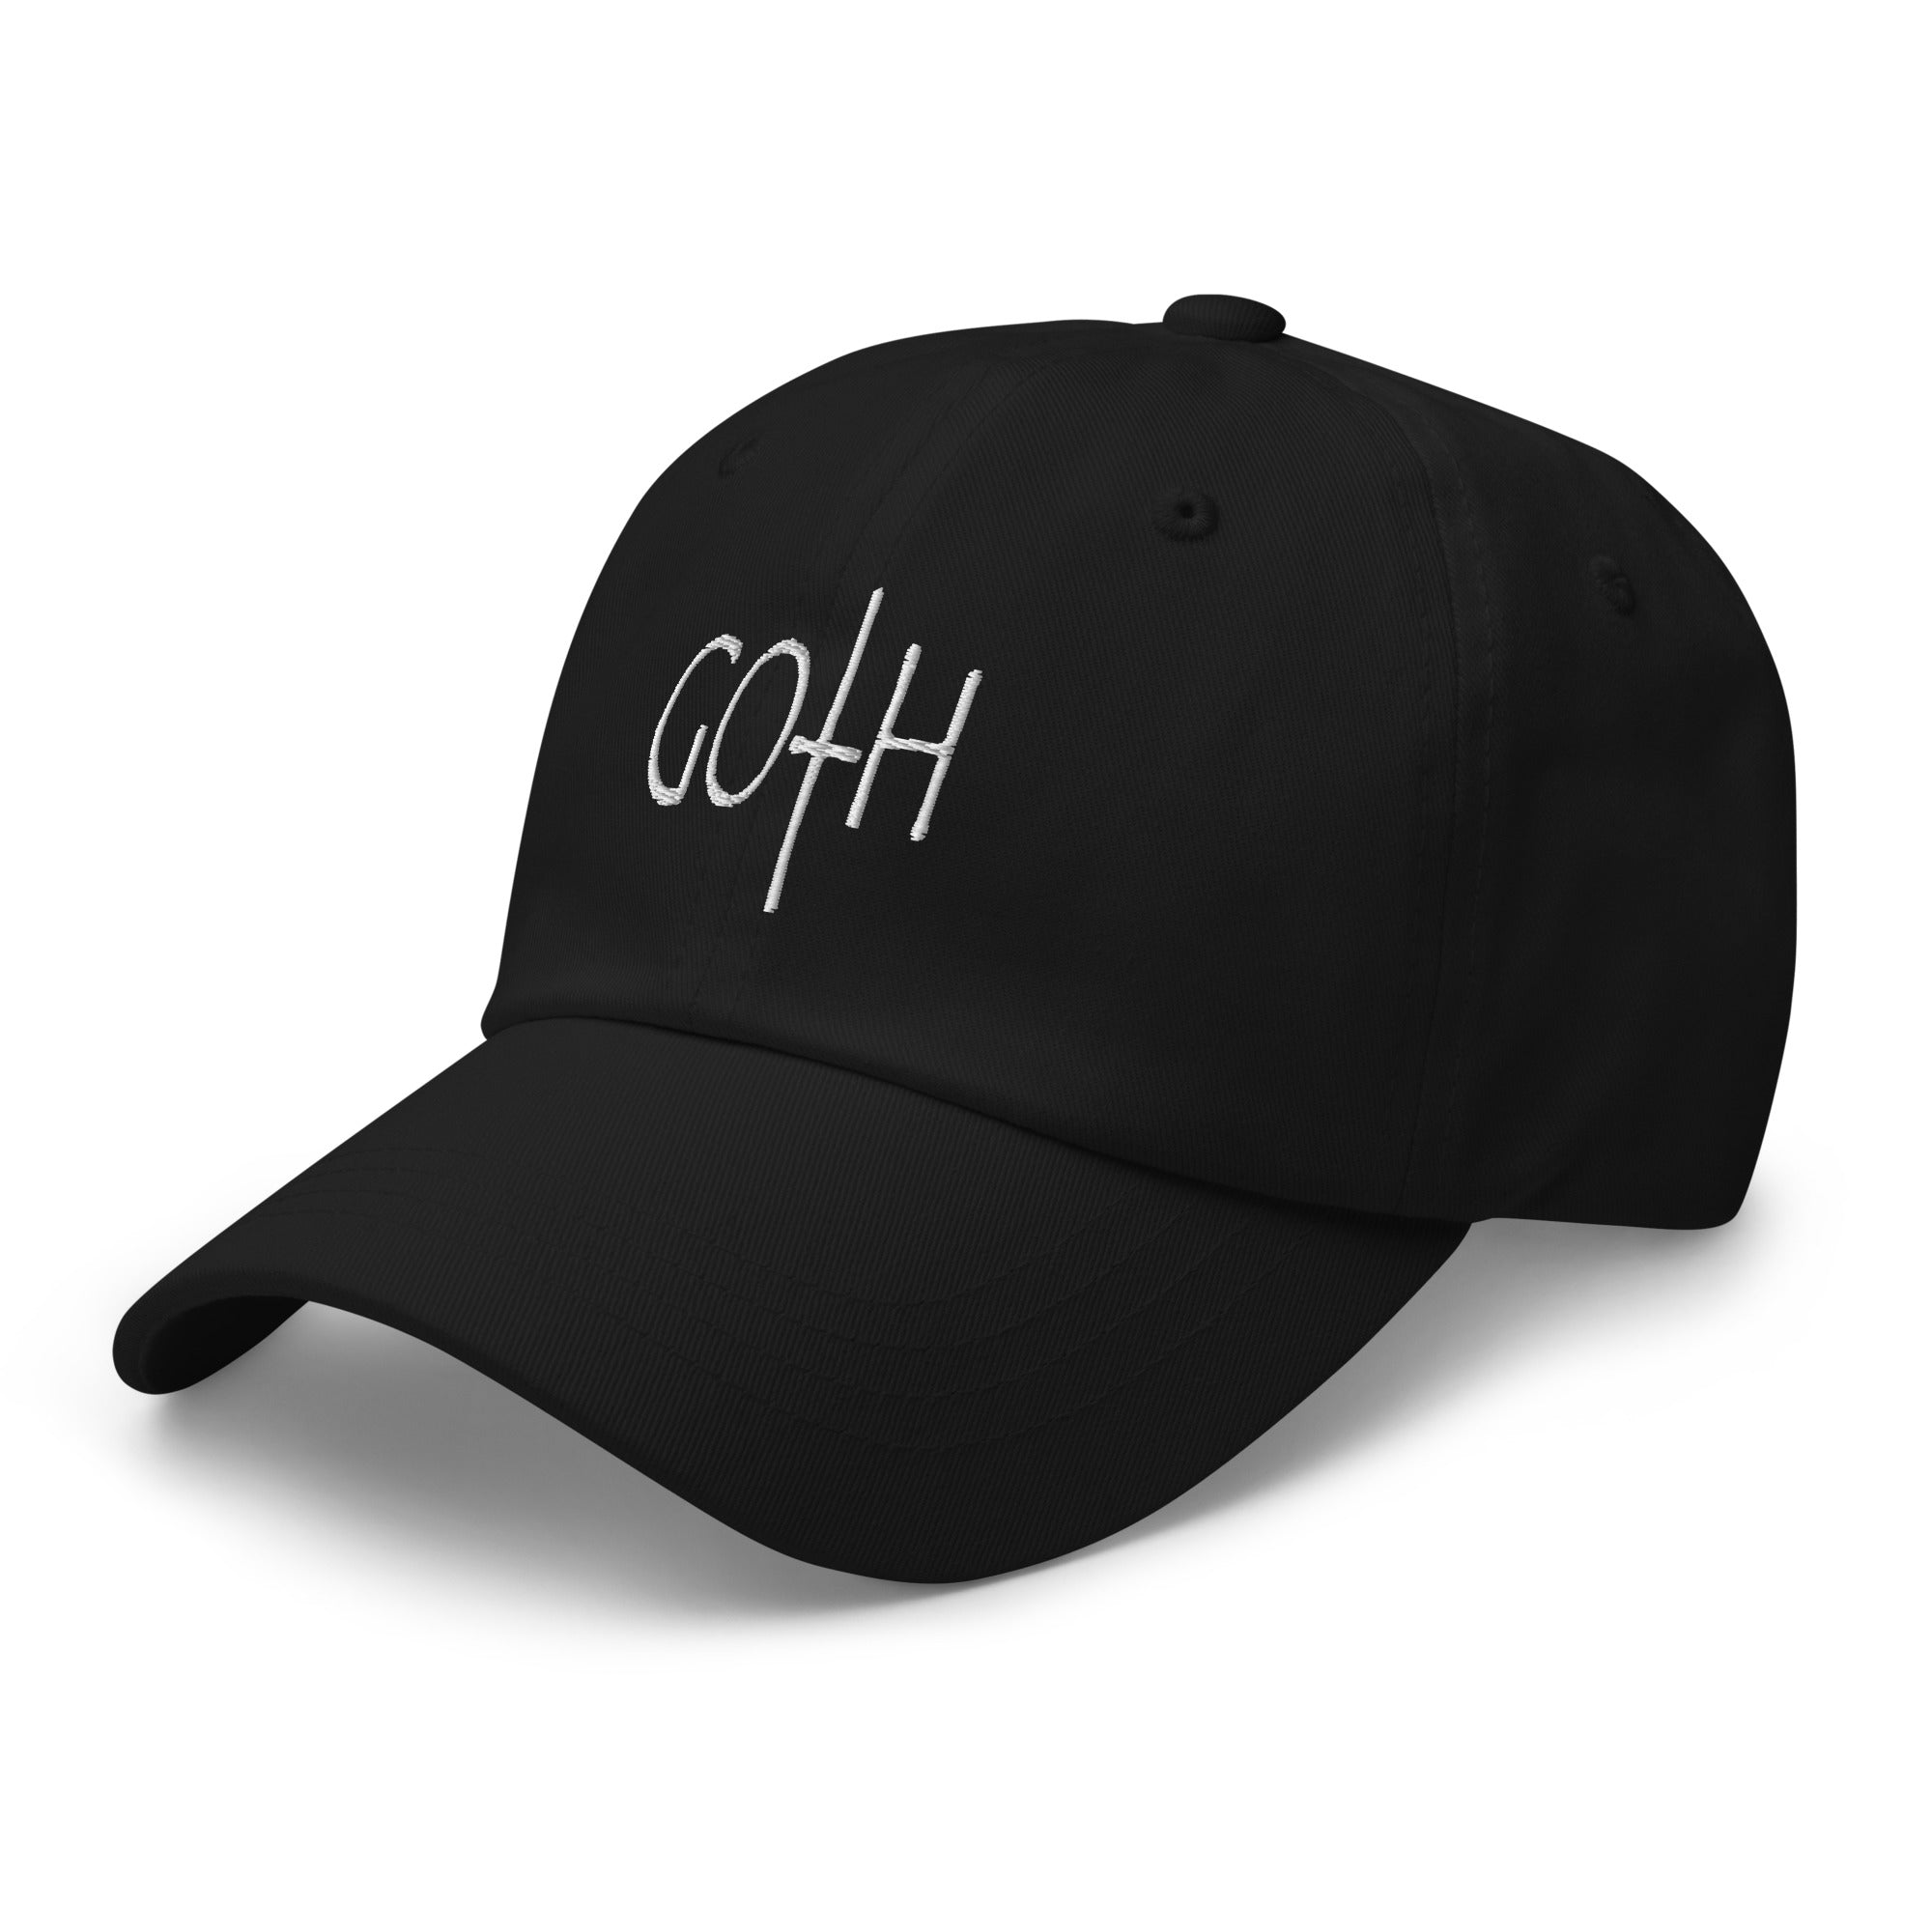 Goth Dark and Morbid Style Halloween Celebration Baseball Cap Dad hat - Edge of Life Designs